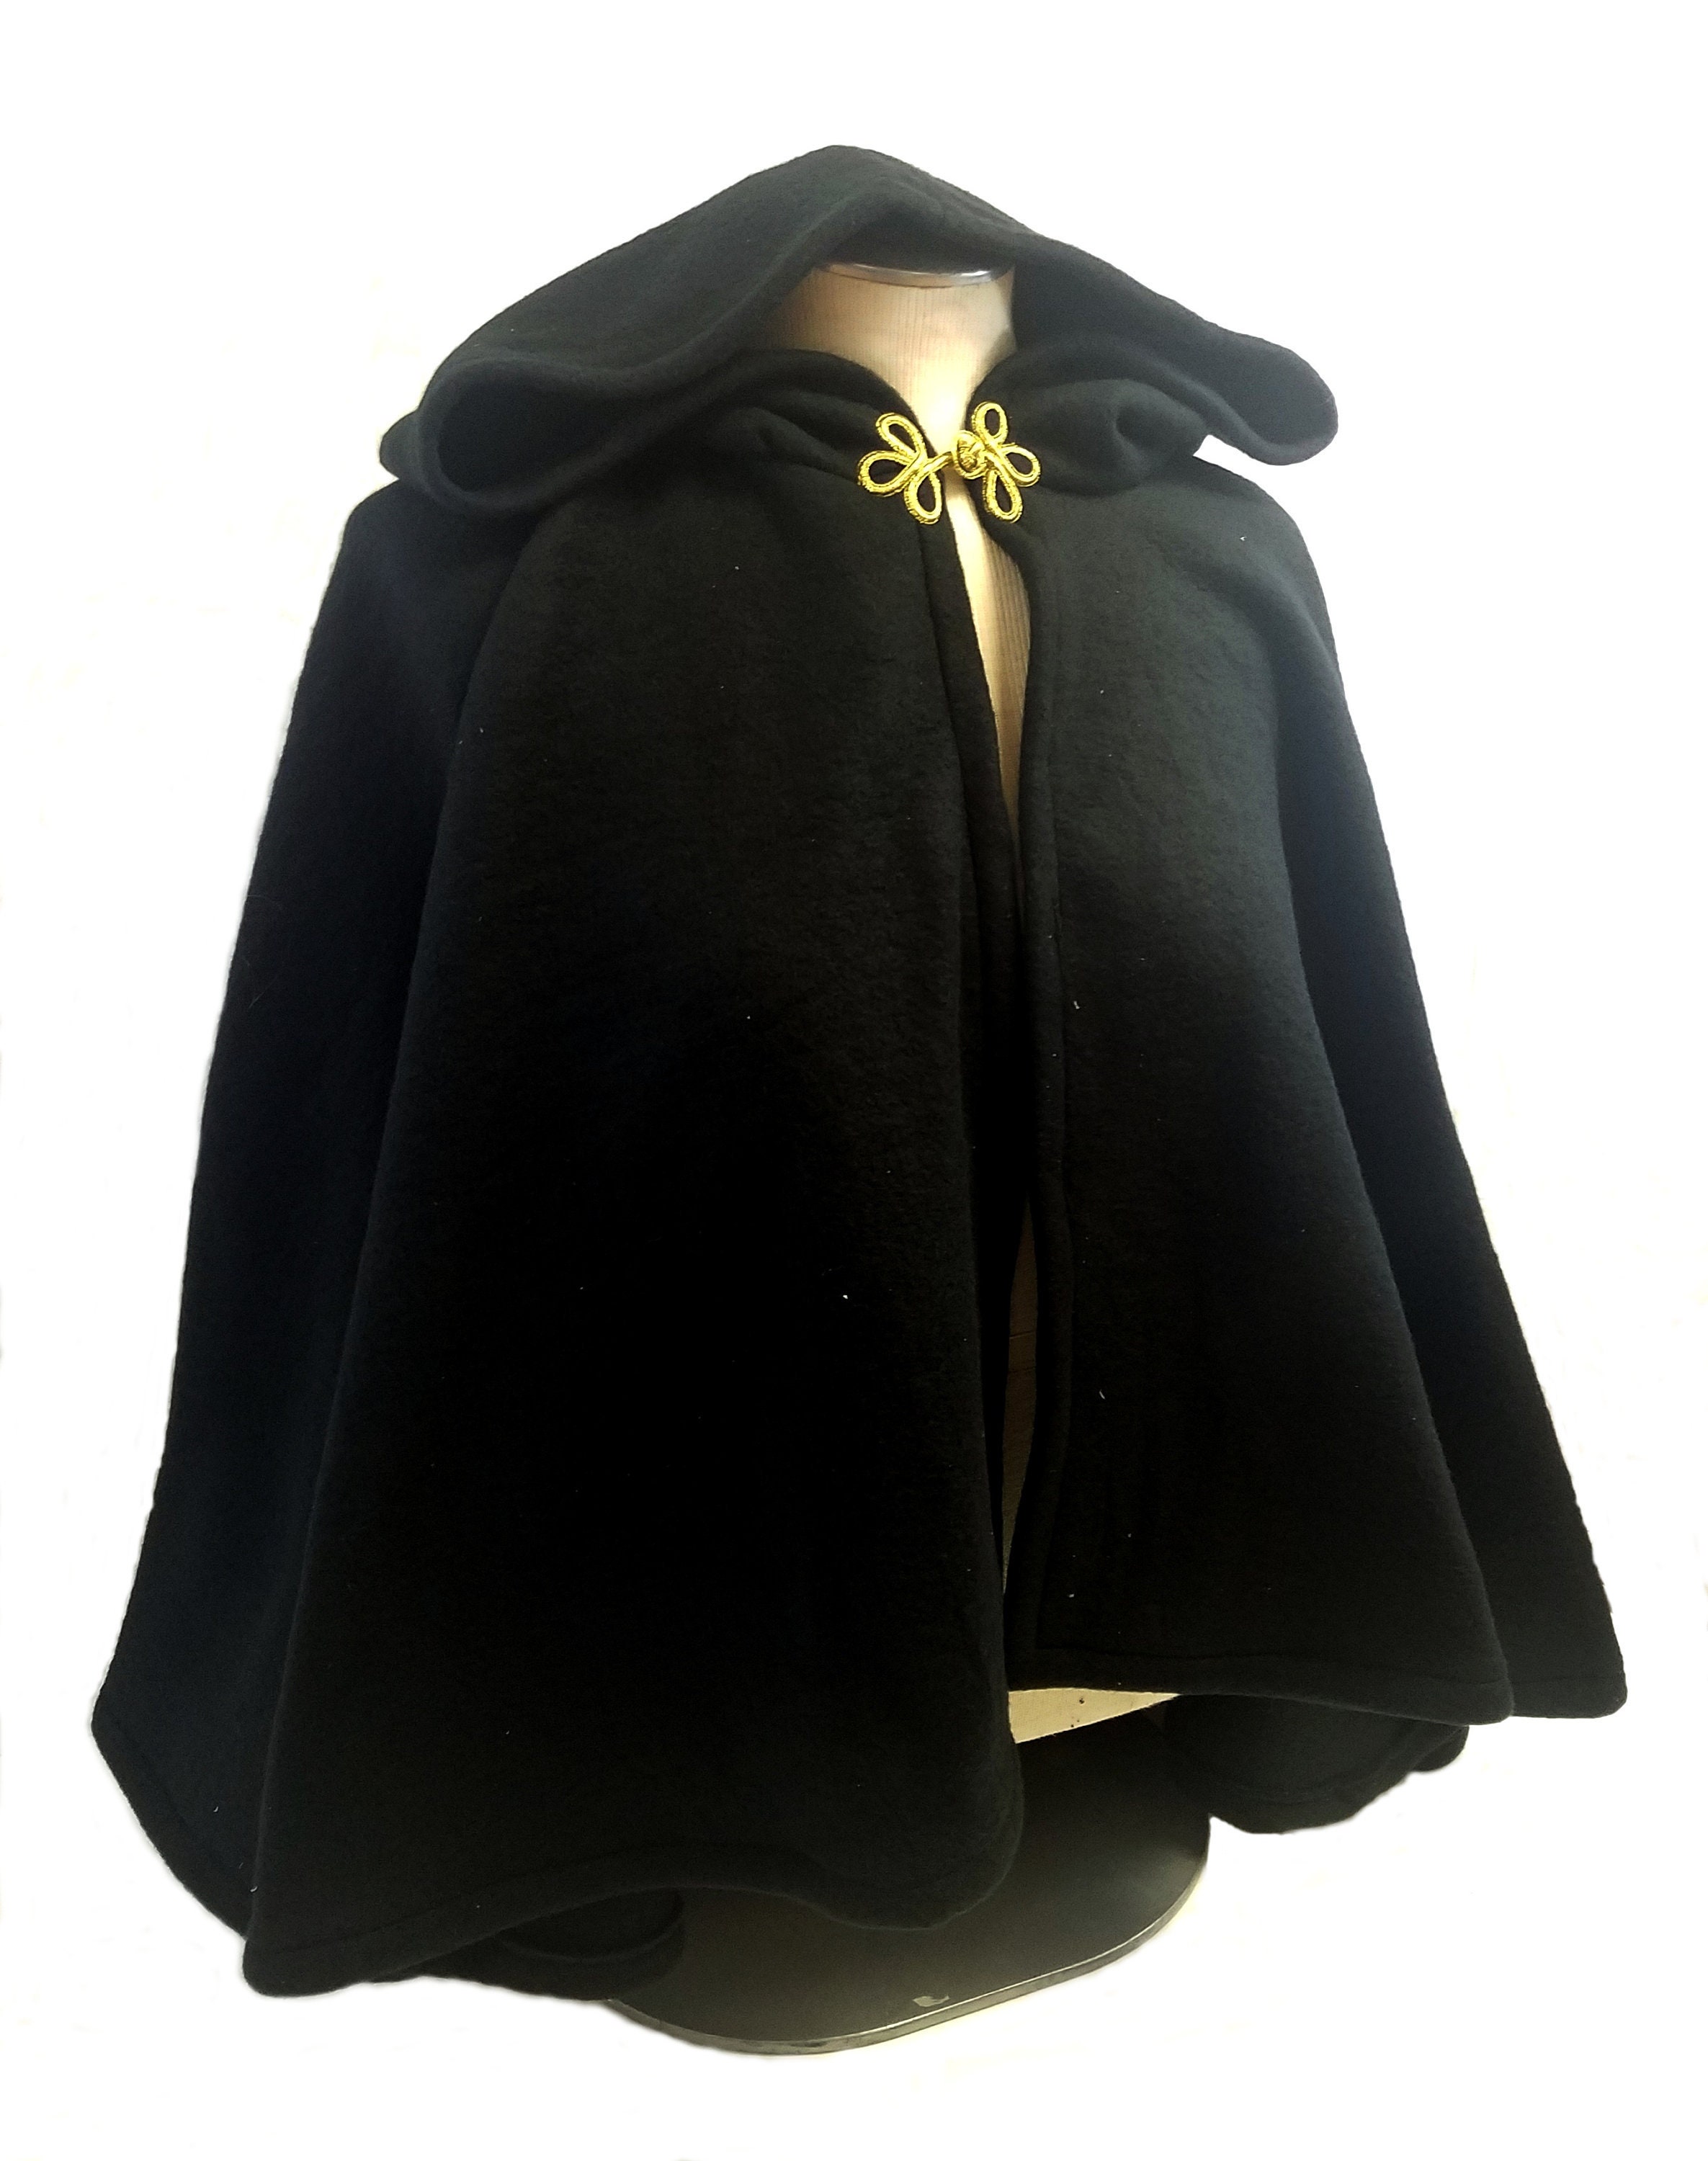 wyrdarmouries Short Fleece Cloak, Black Full Circle Cloak Cape with Hood, Black Fall Spring Jacket Costume Cloak Capelet Hood